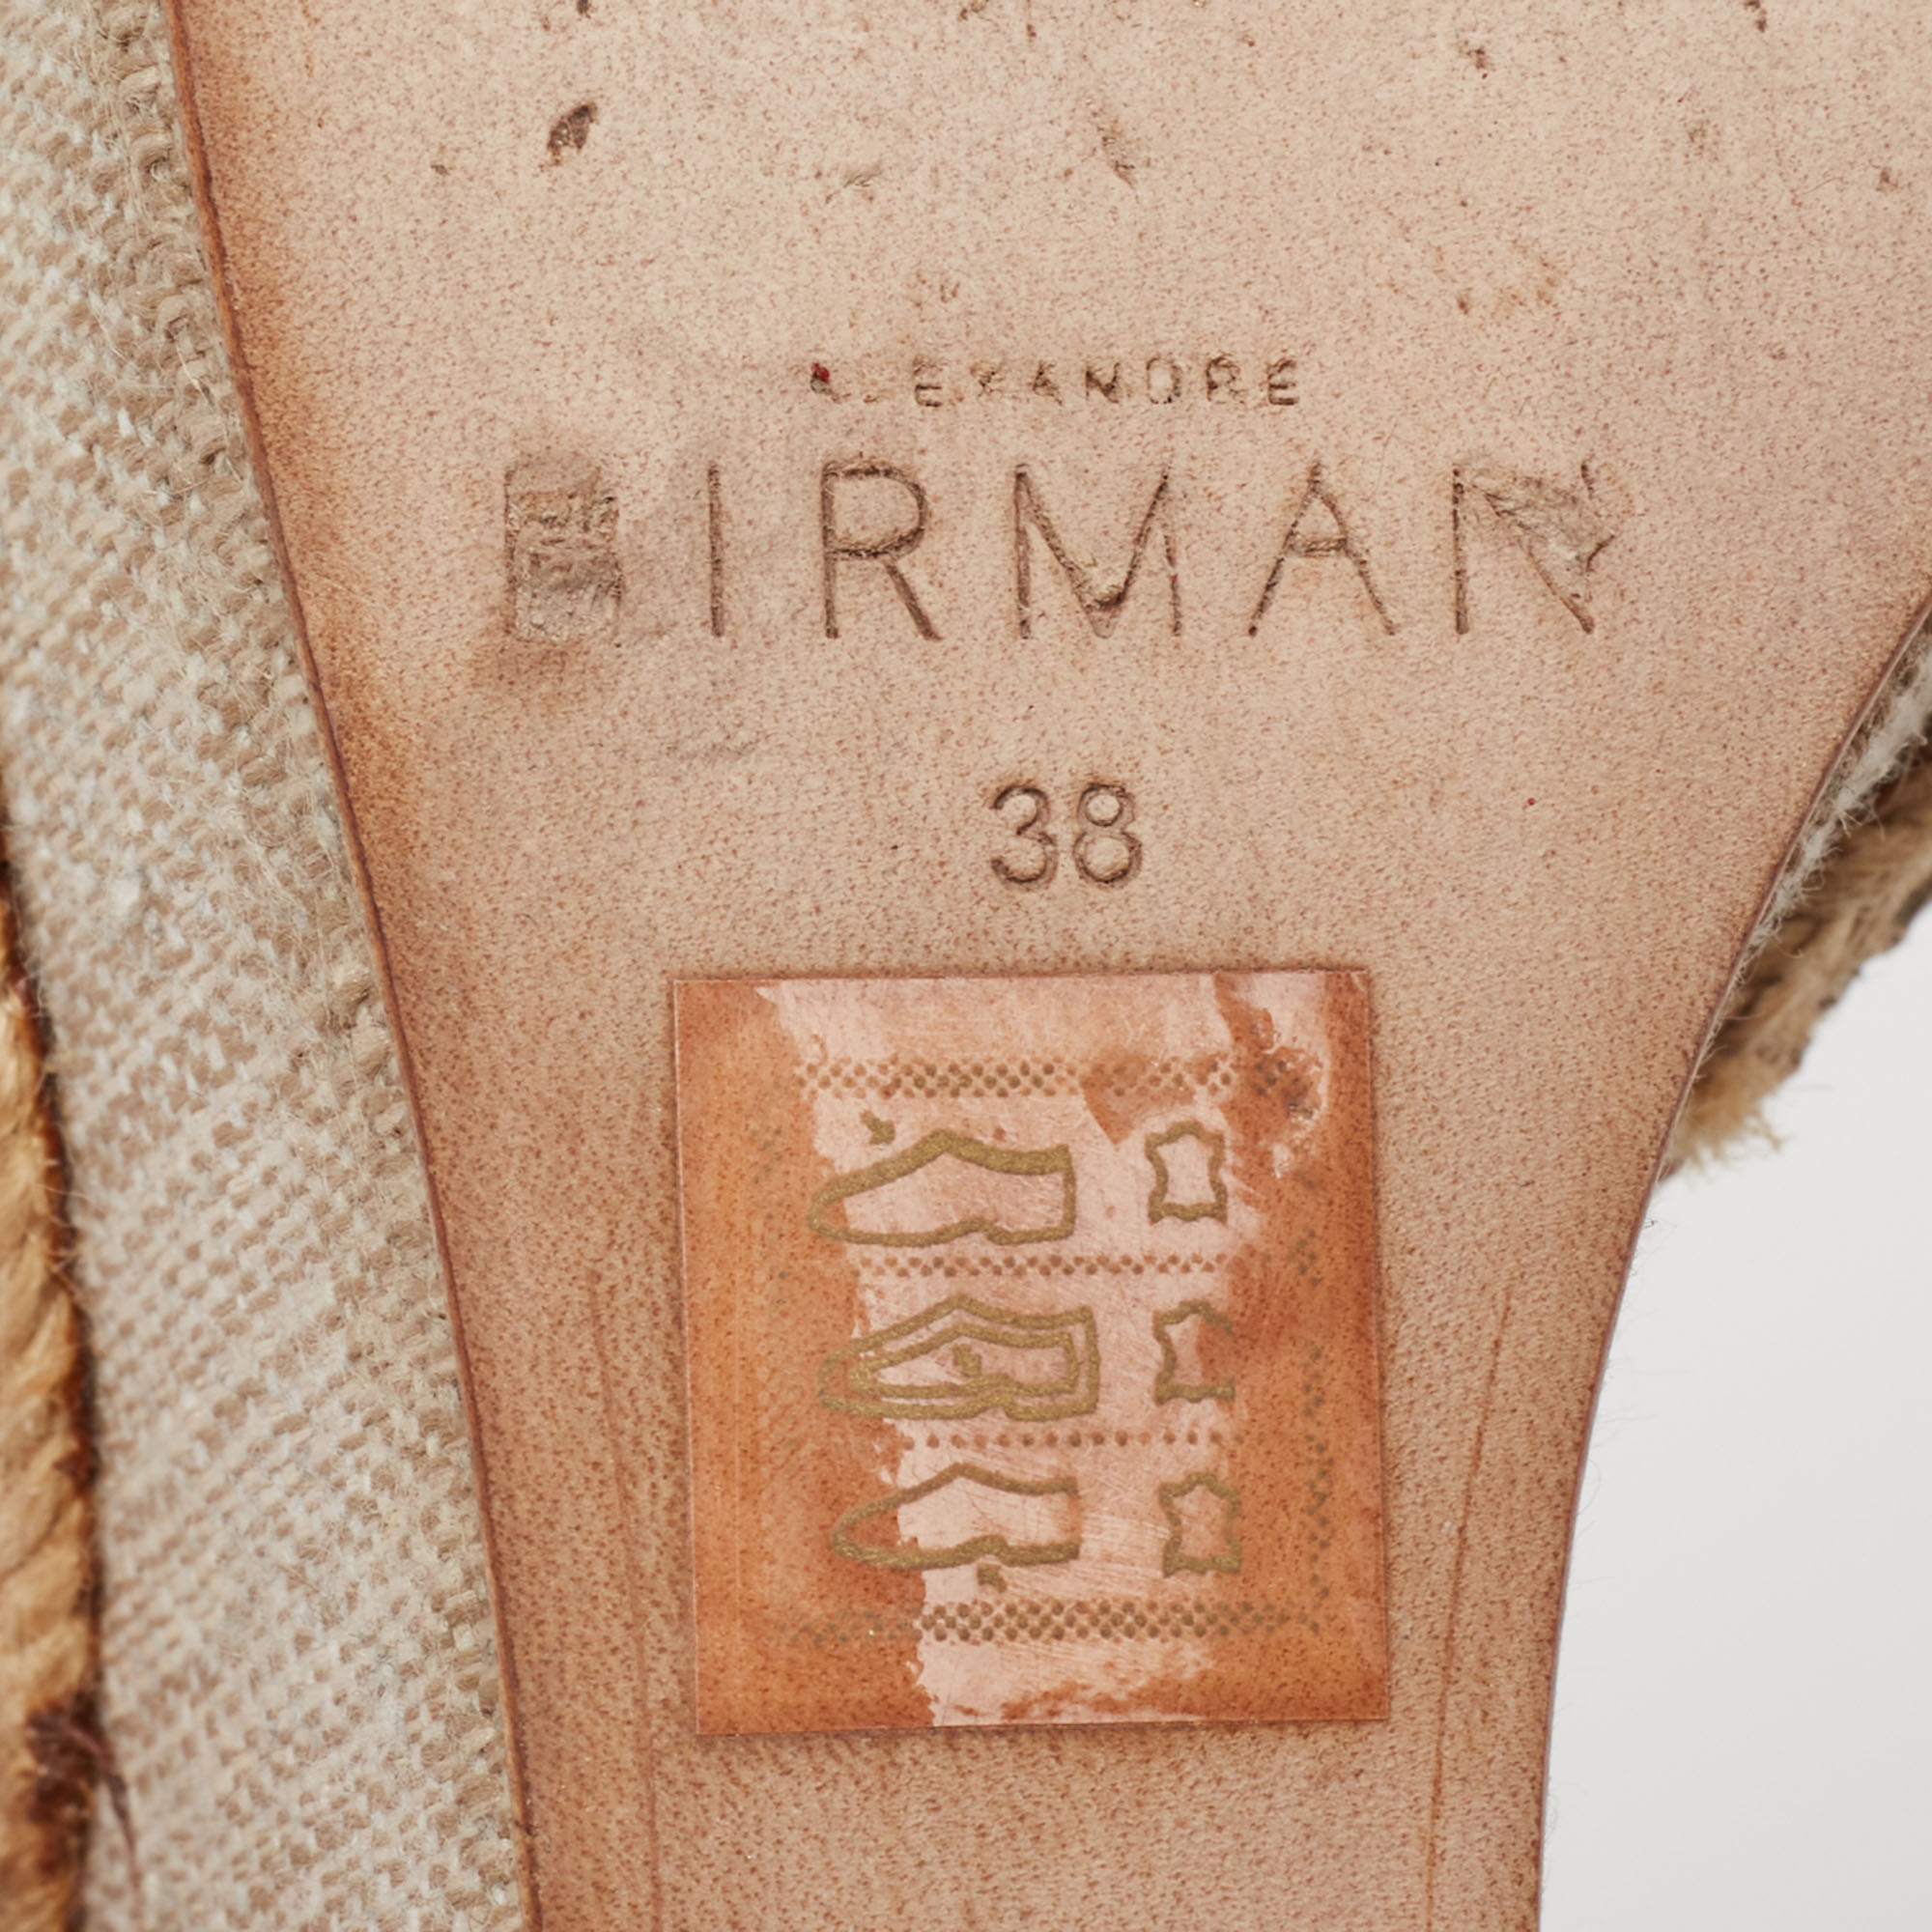 Alexandre Birman Multicolor Python Leather Wedge Ankle Wrap Sandals Size 38